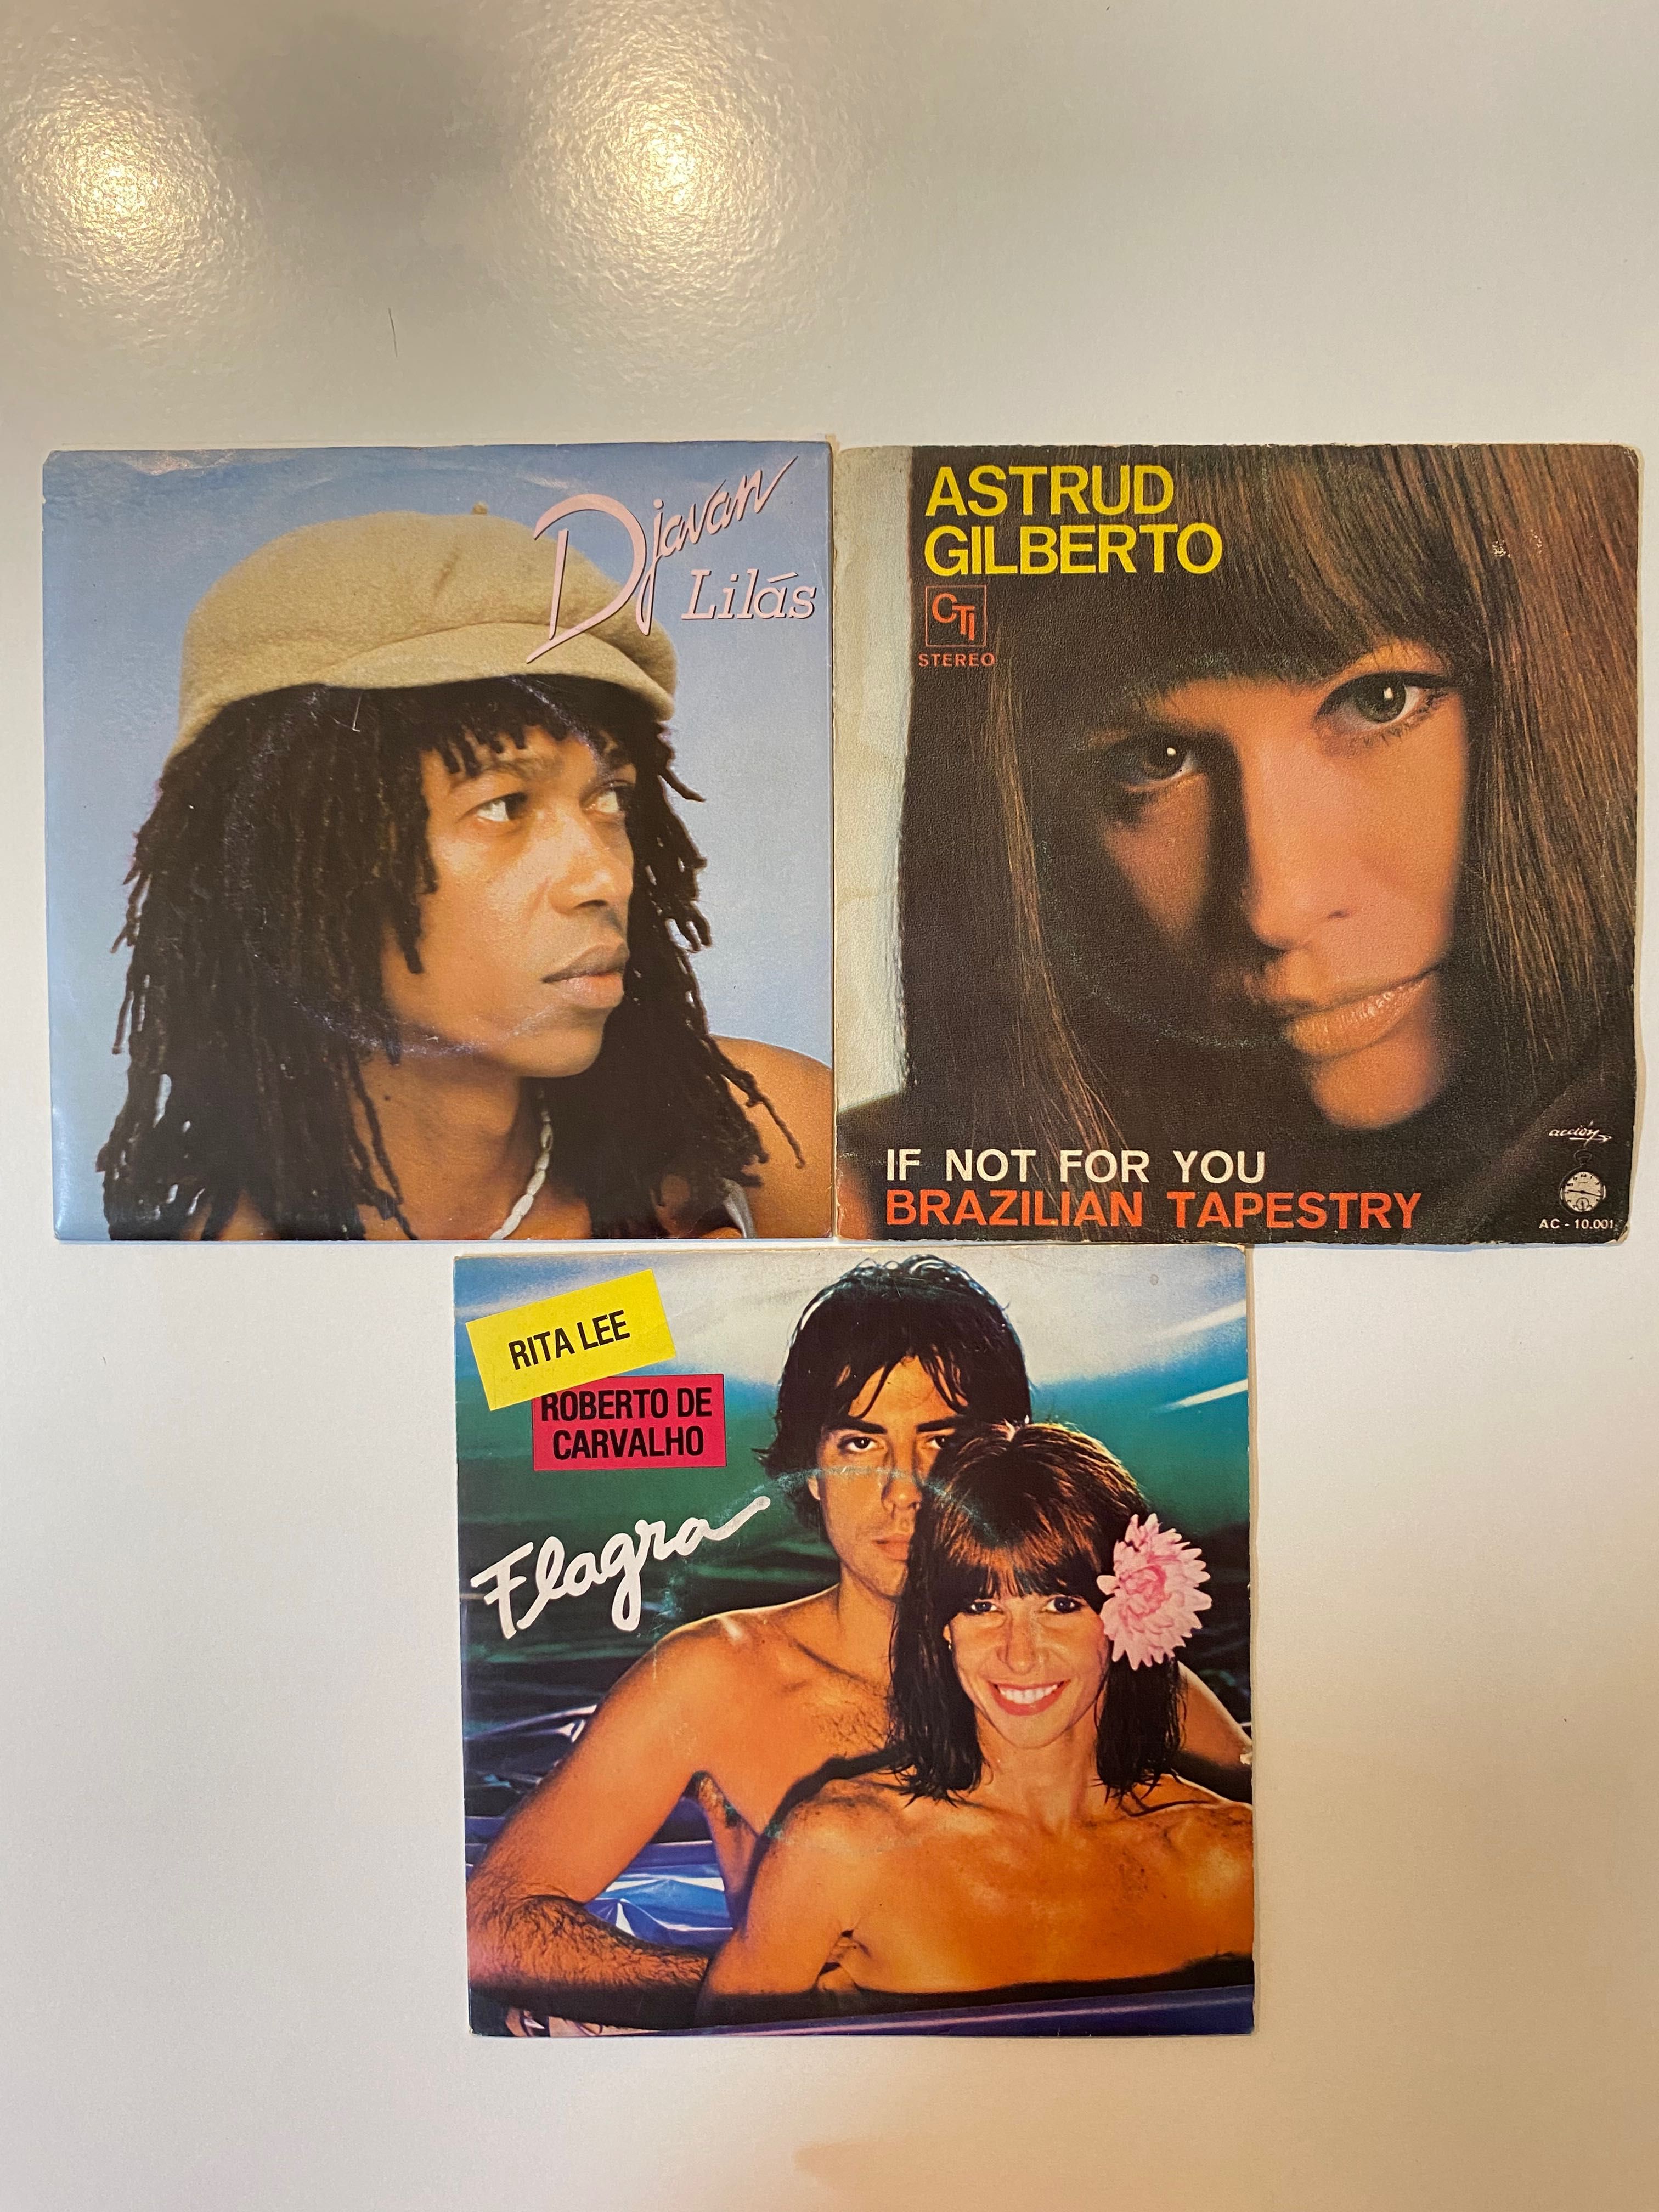 Discos de vinil Rita Lee, Djavan, Astrud Gilberto